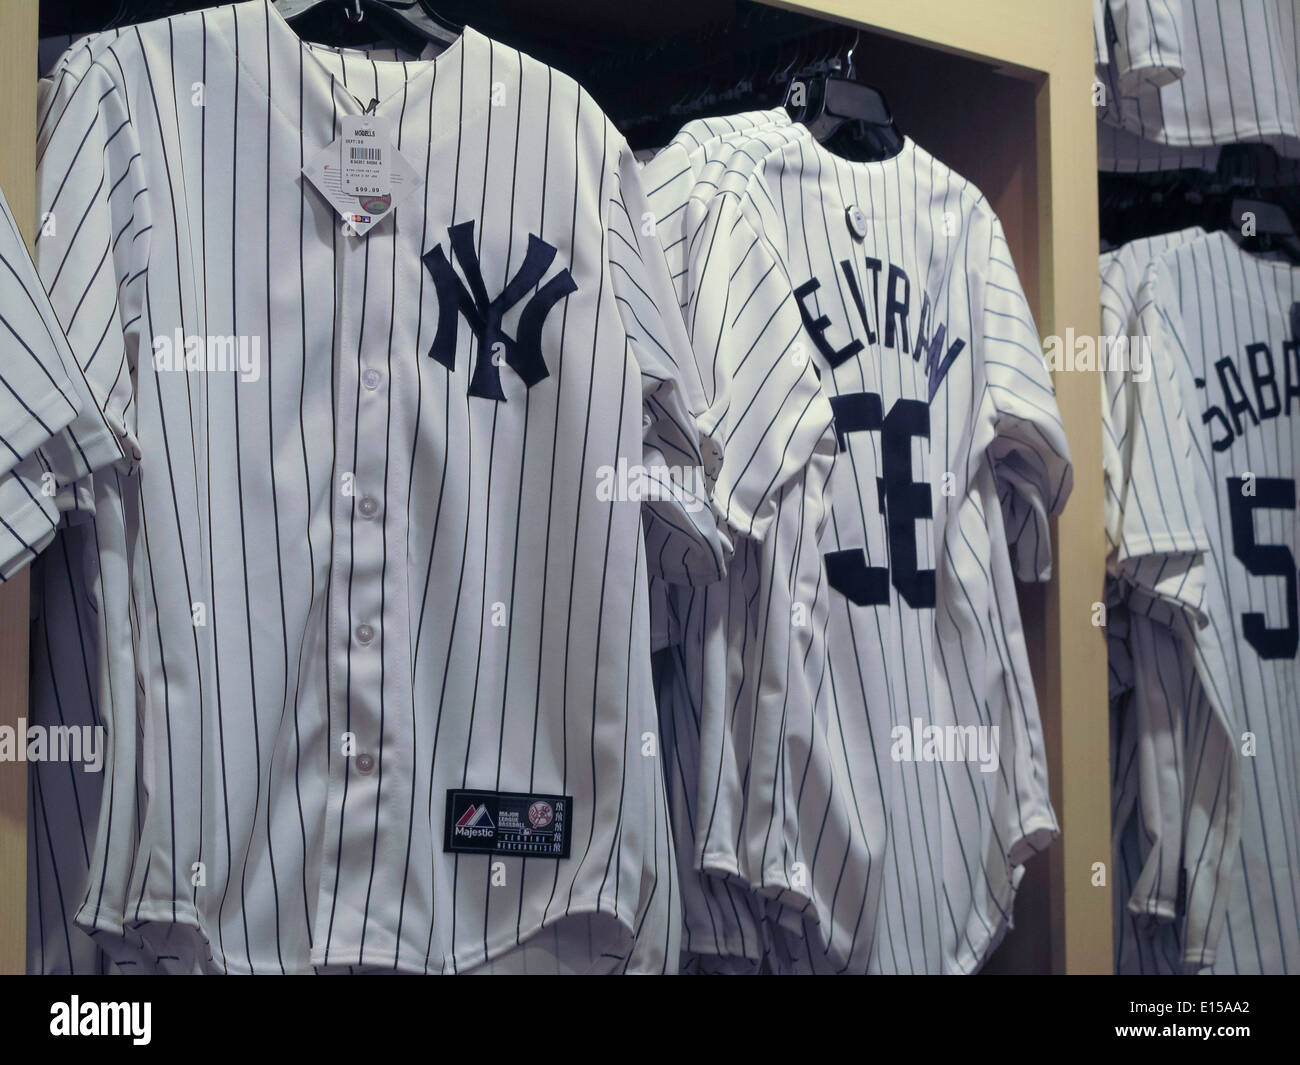 New York Yankees' Jerseys, Modell's Sporting Goods Store Interior, NYC  Stock Photo - Alamy